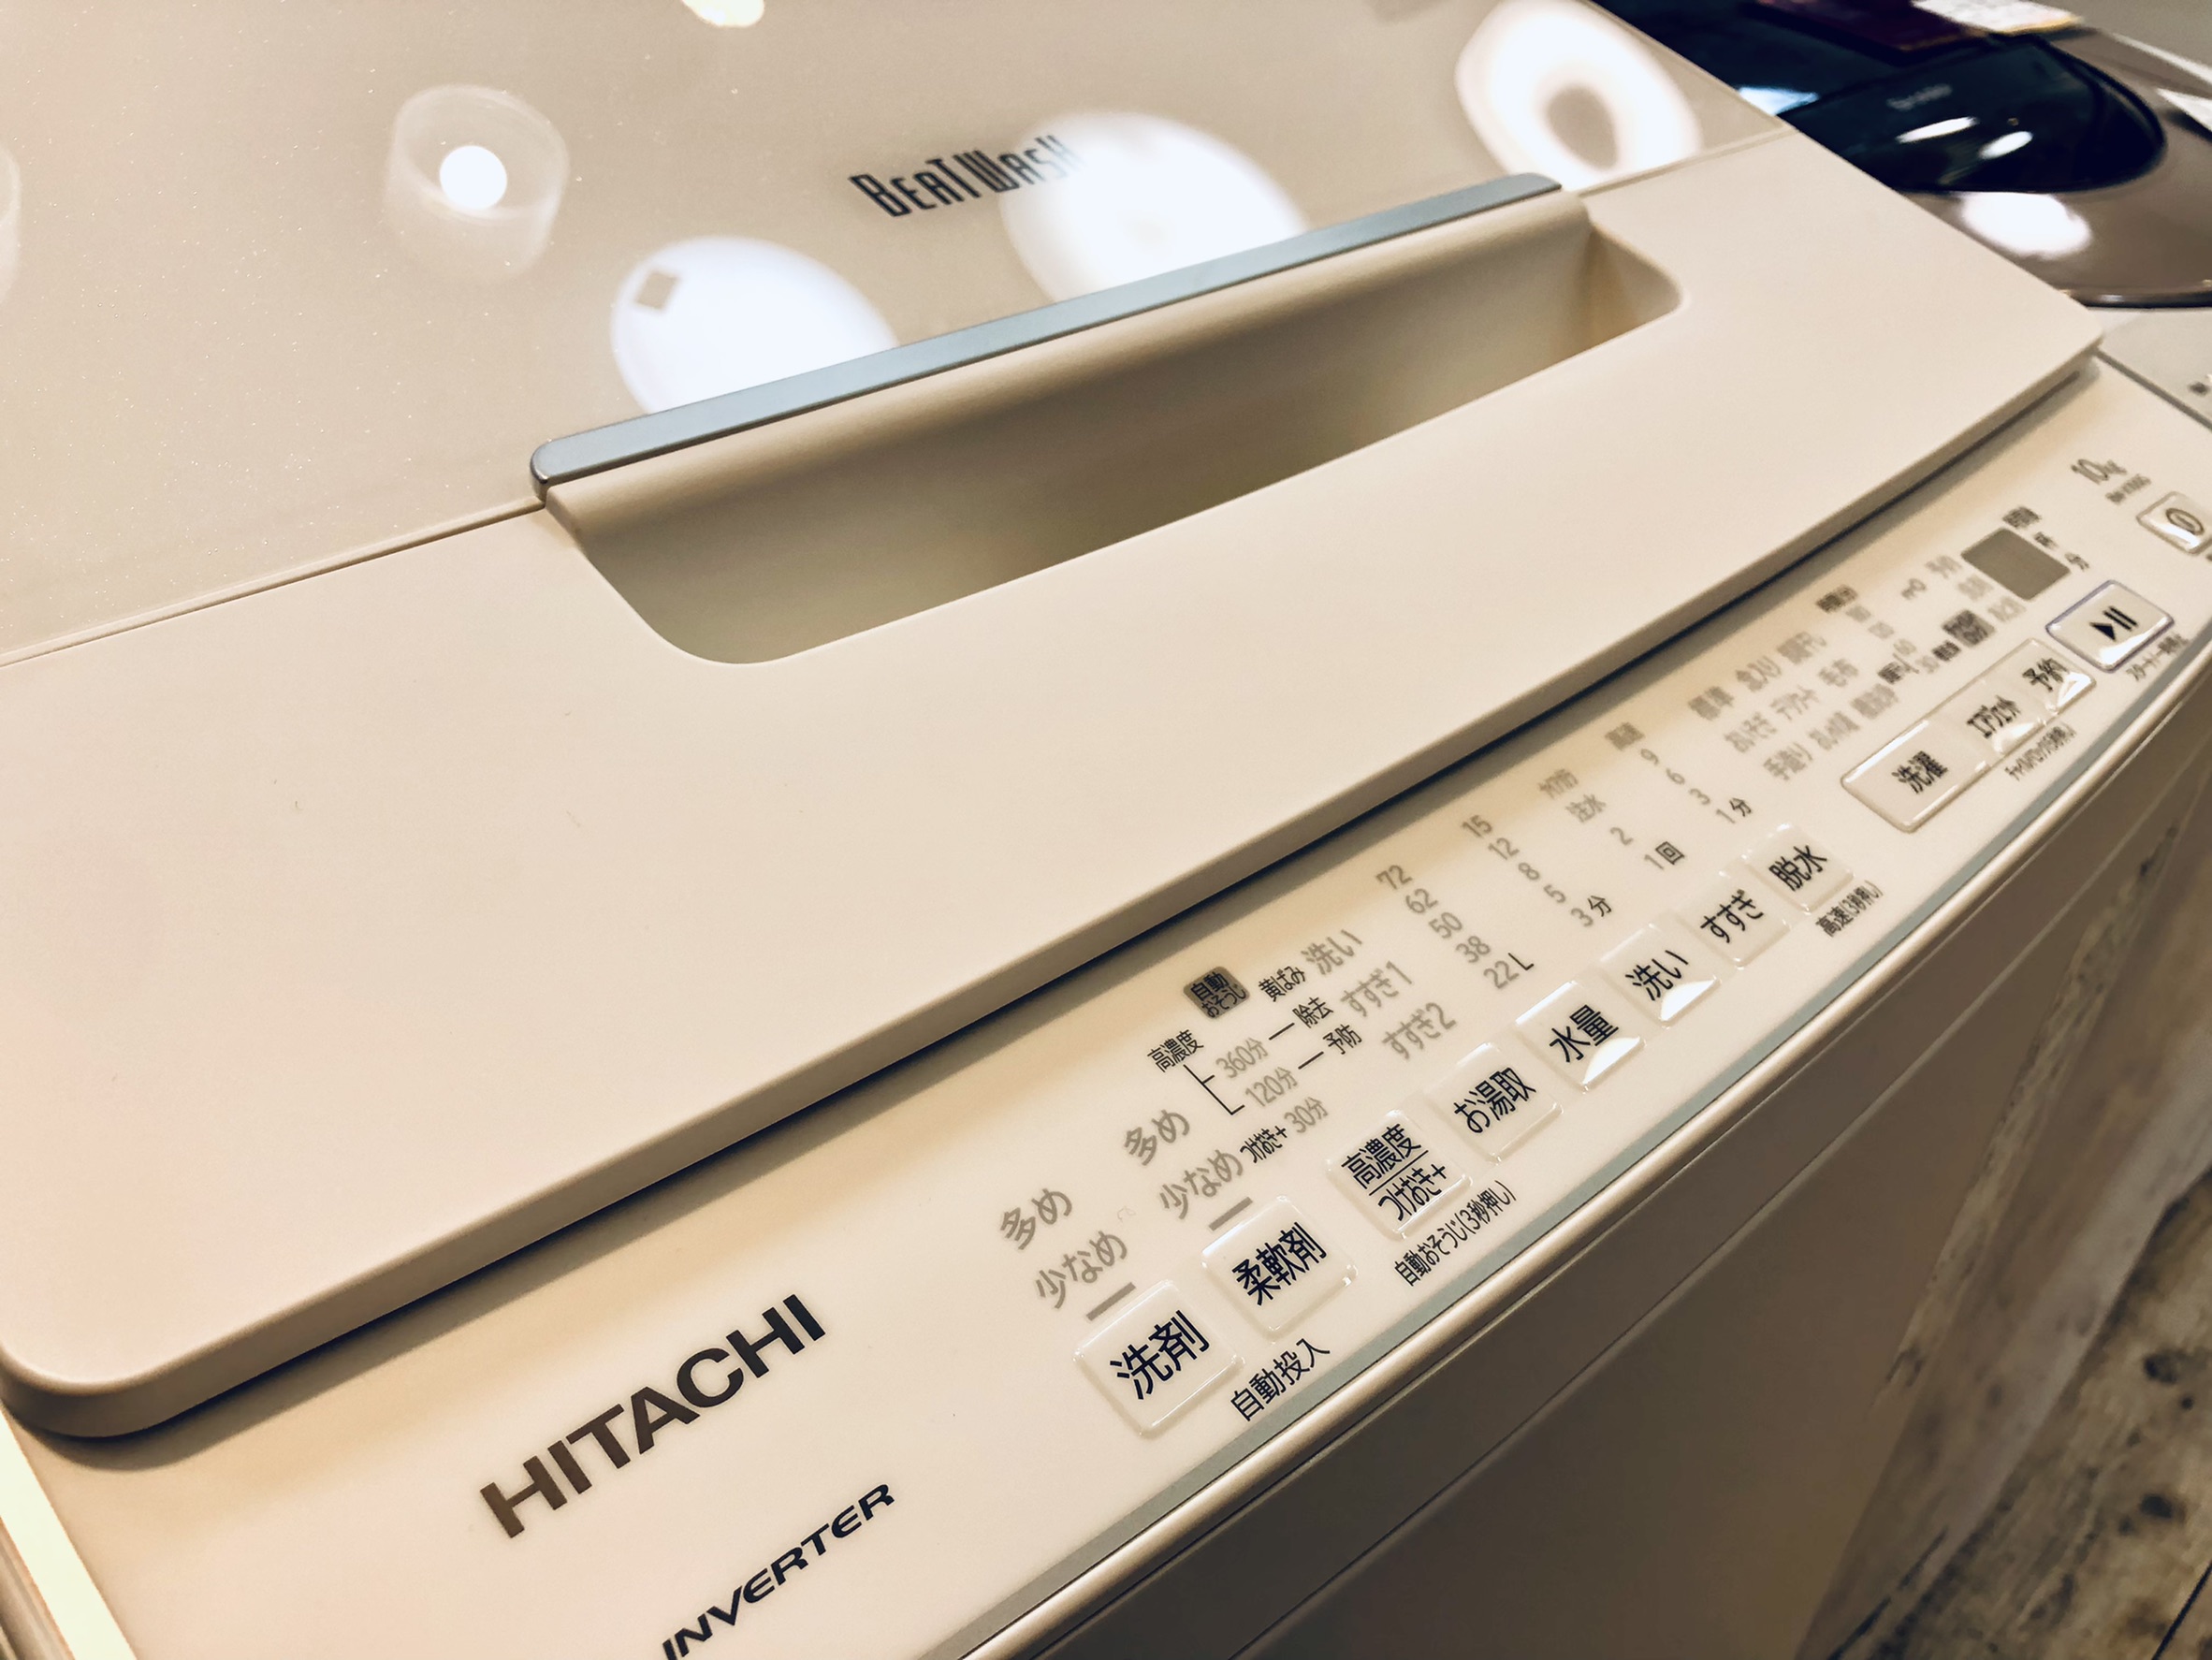 高質 BW-X100G ビートウォッシュ 日立 縦型洗濯機 簡易乾燥機能付き 洗濯容量10kg 液体洗剤 柔軟剤自動投入